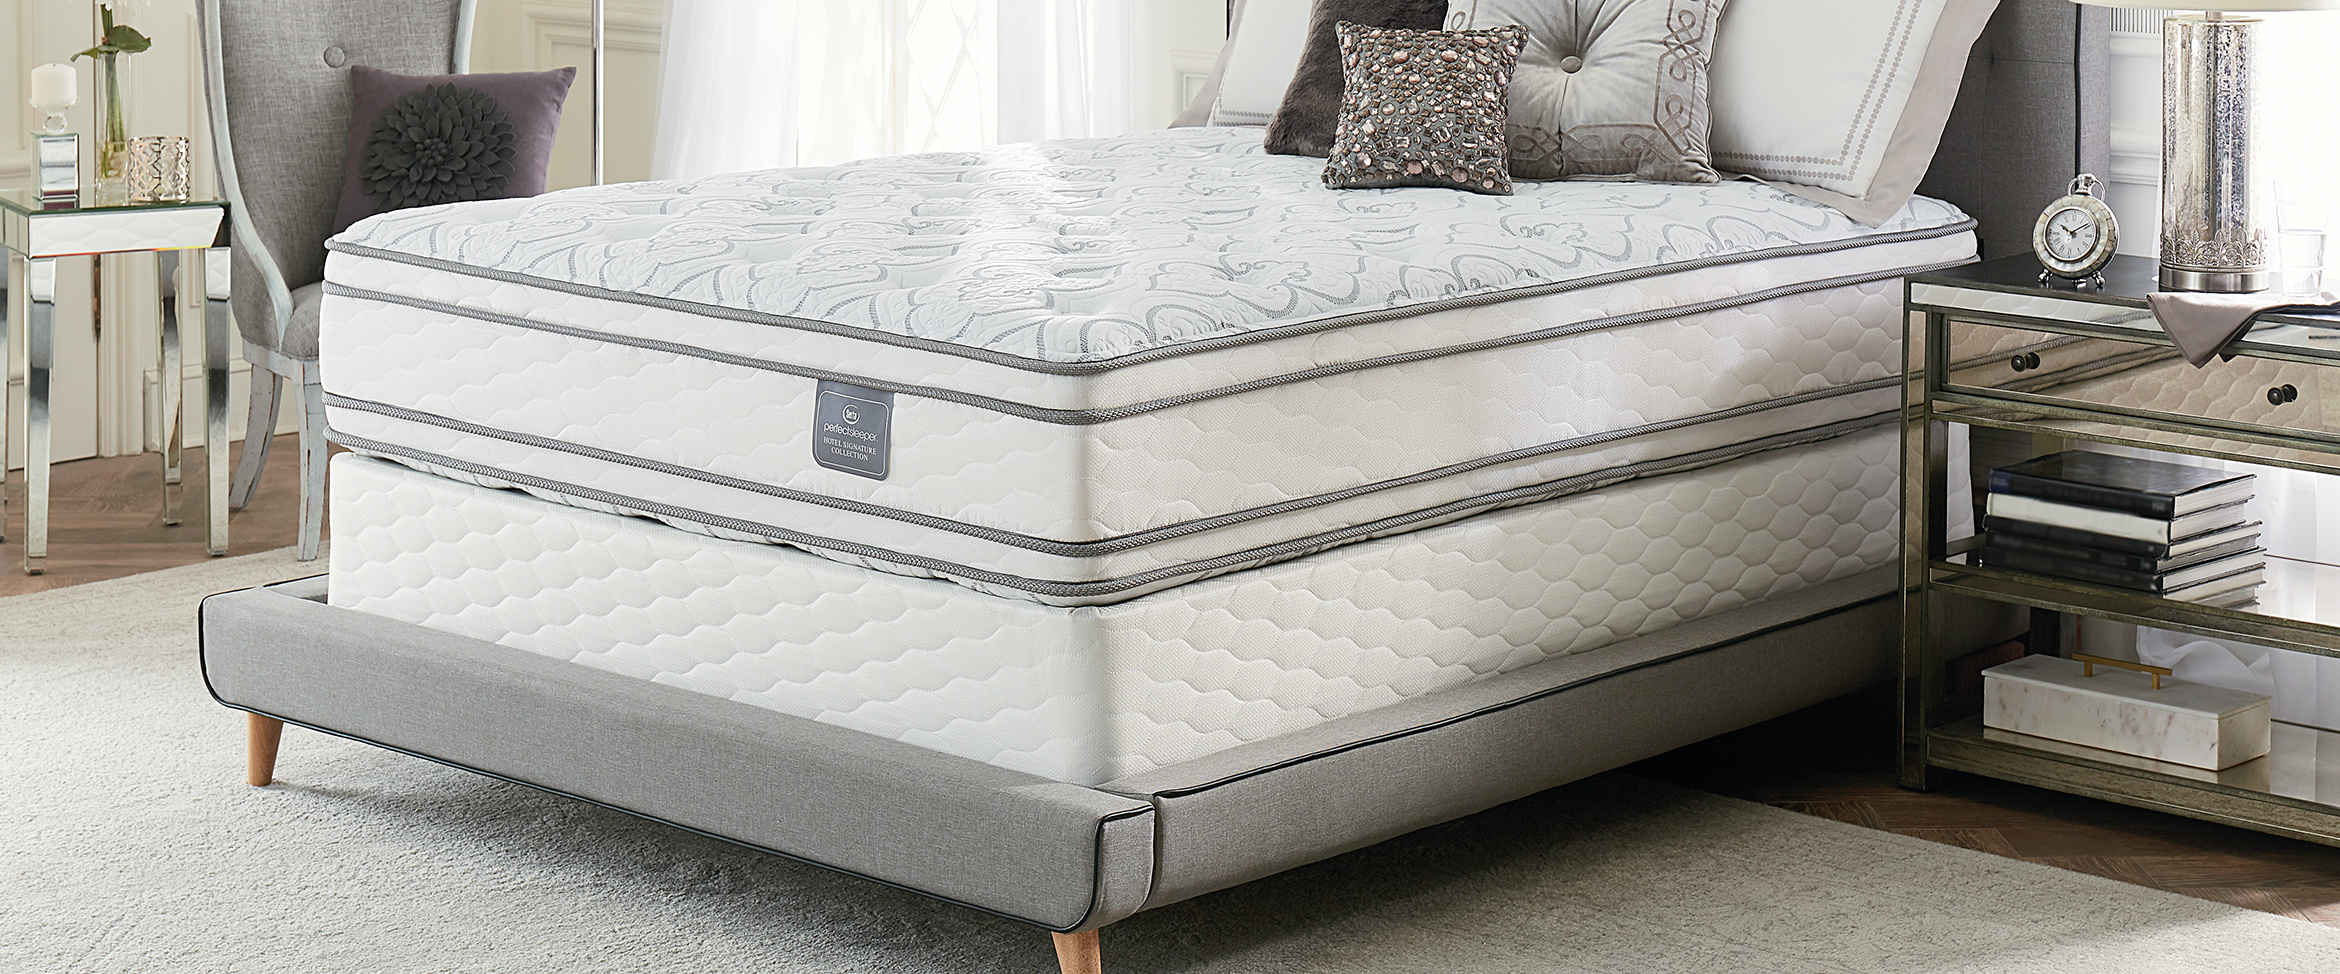 double sided serta queen size mattress